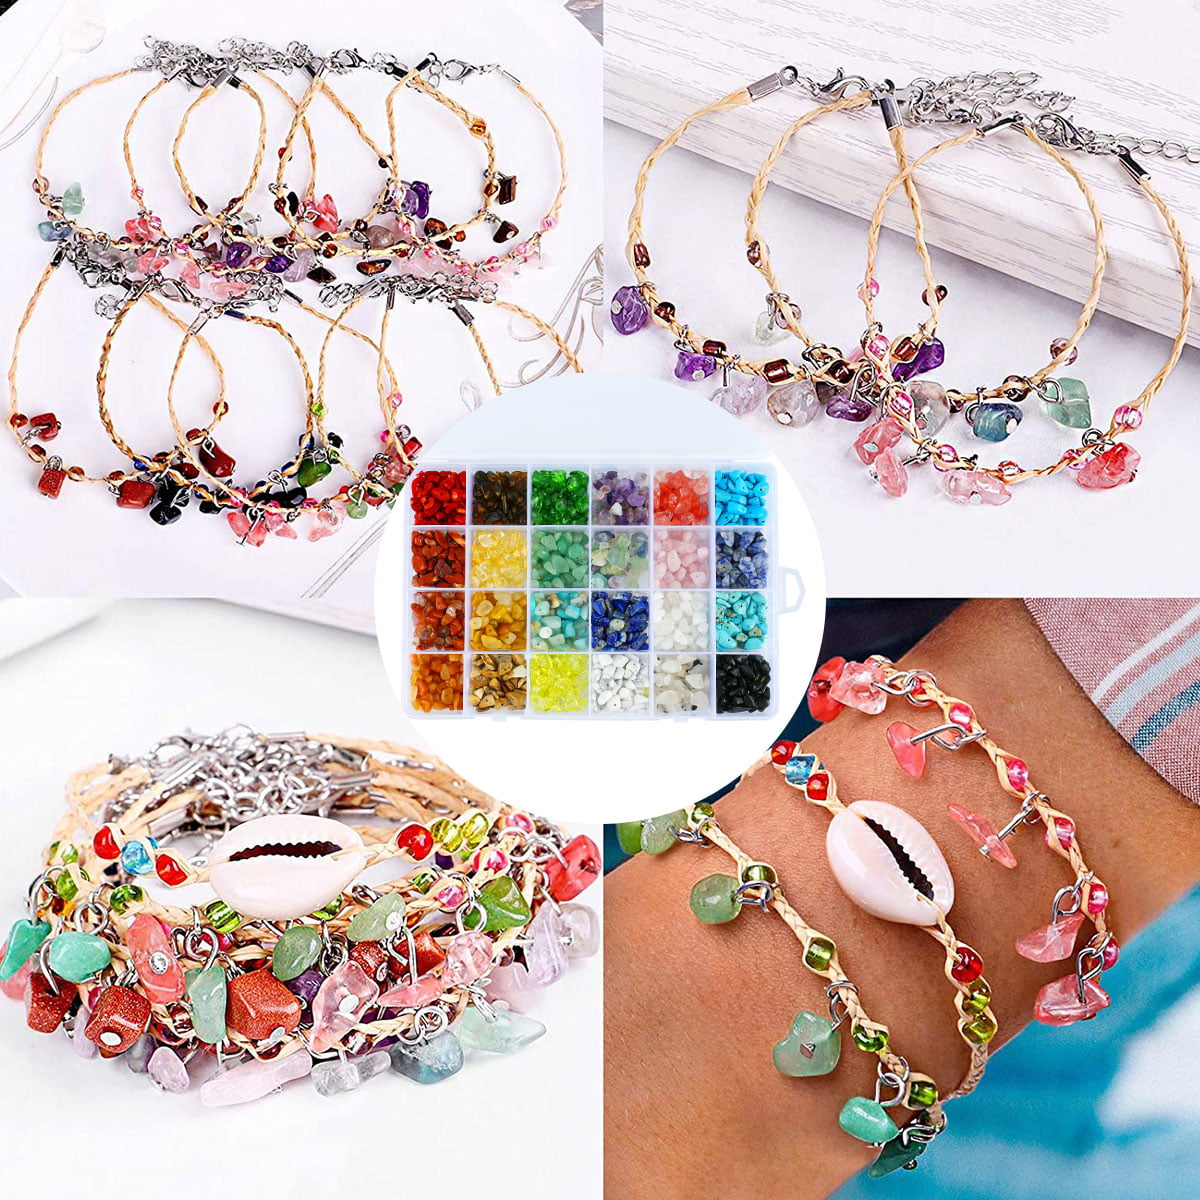 KYMLINKER Natural Irregular Chip Stone Beads Rock Stone Beads Gemstone Beads for Earrings Bracelet Jewelry Making DIY Craft